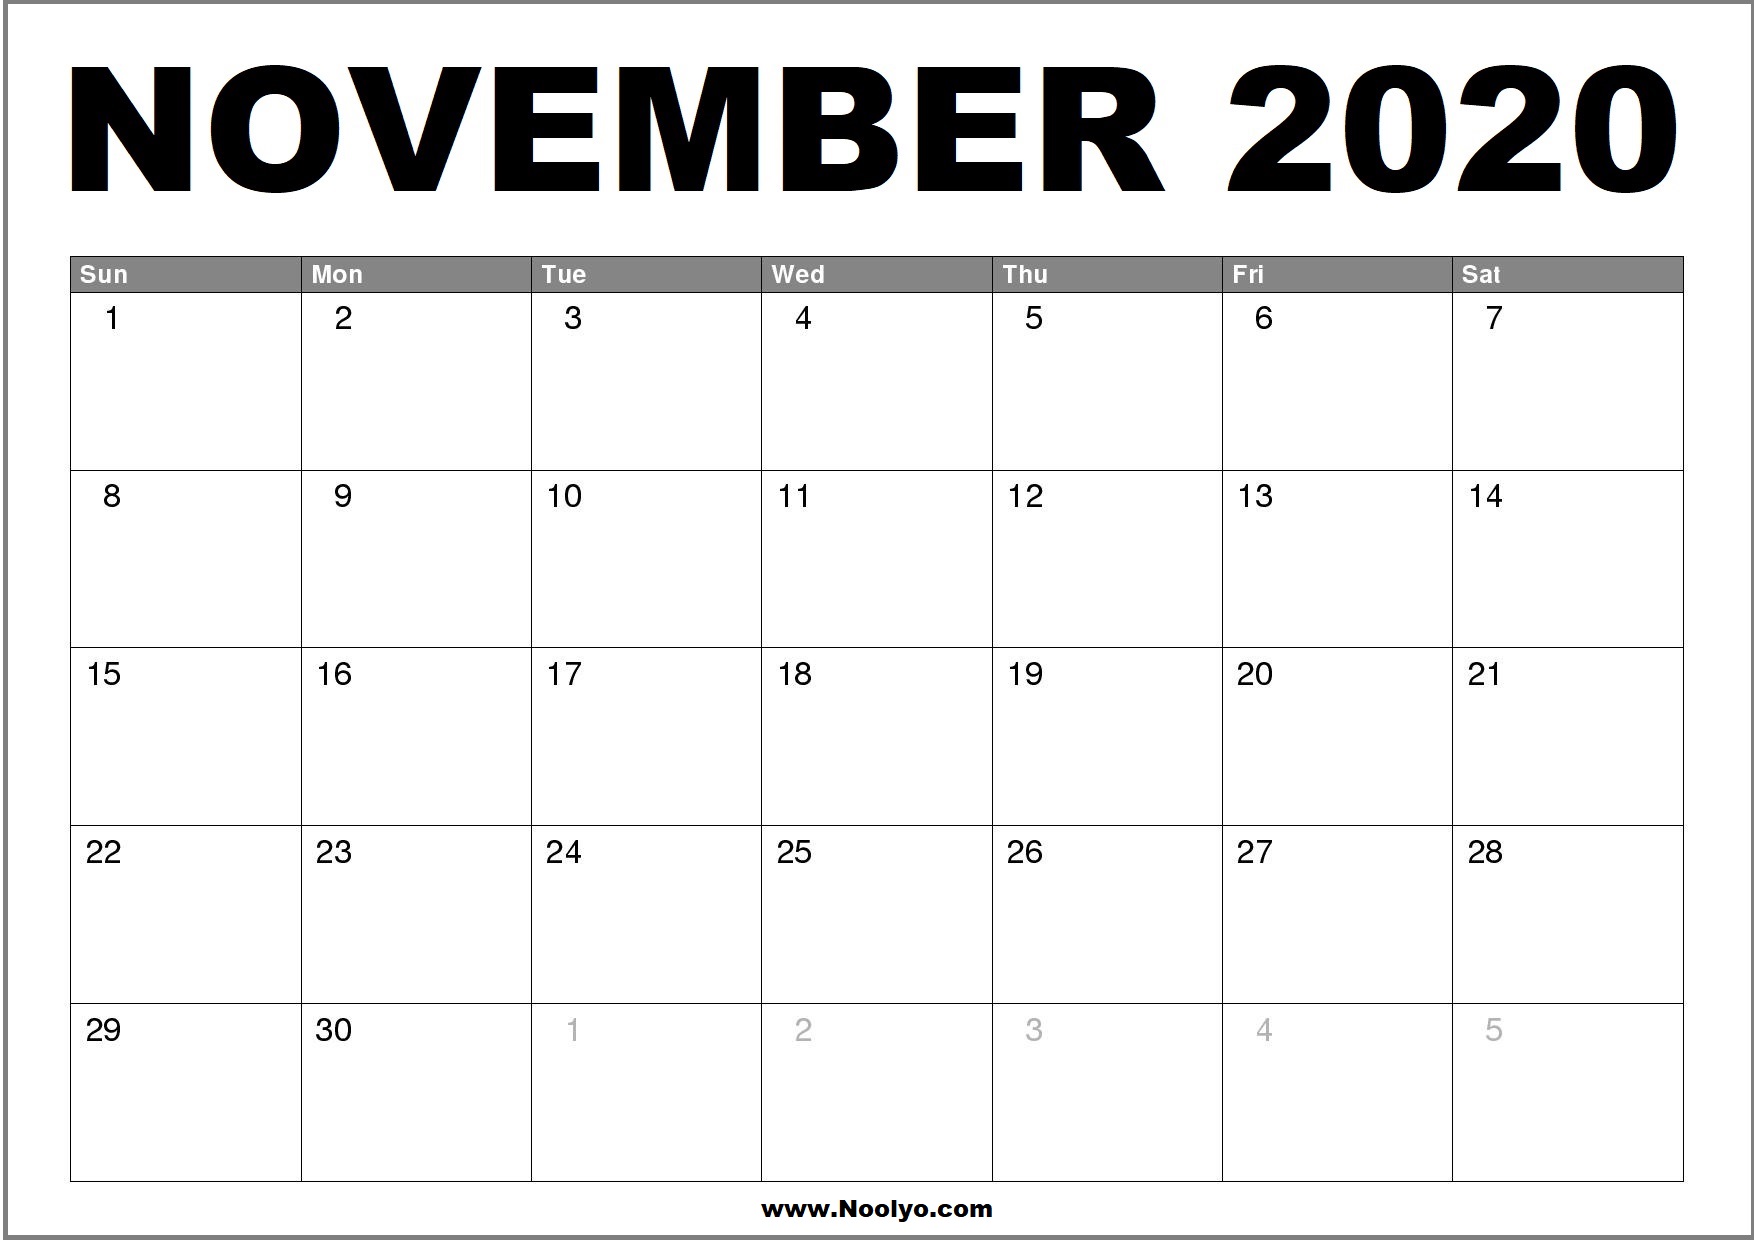 November 2020 Calendar Printable – Free Download